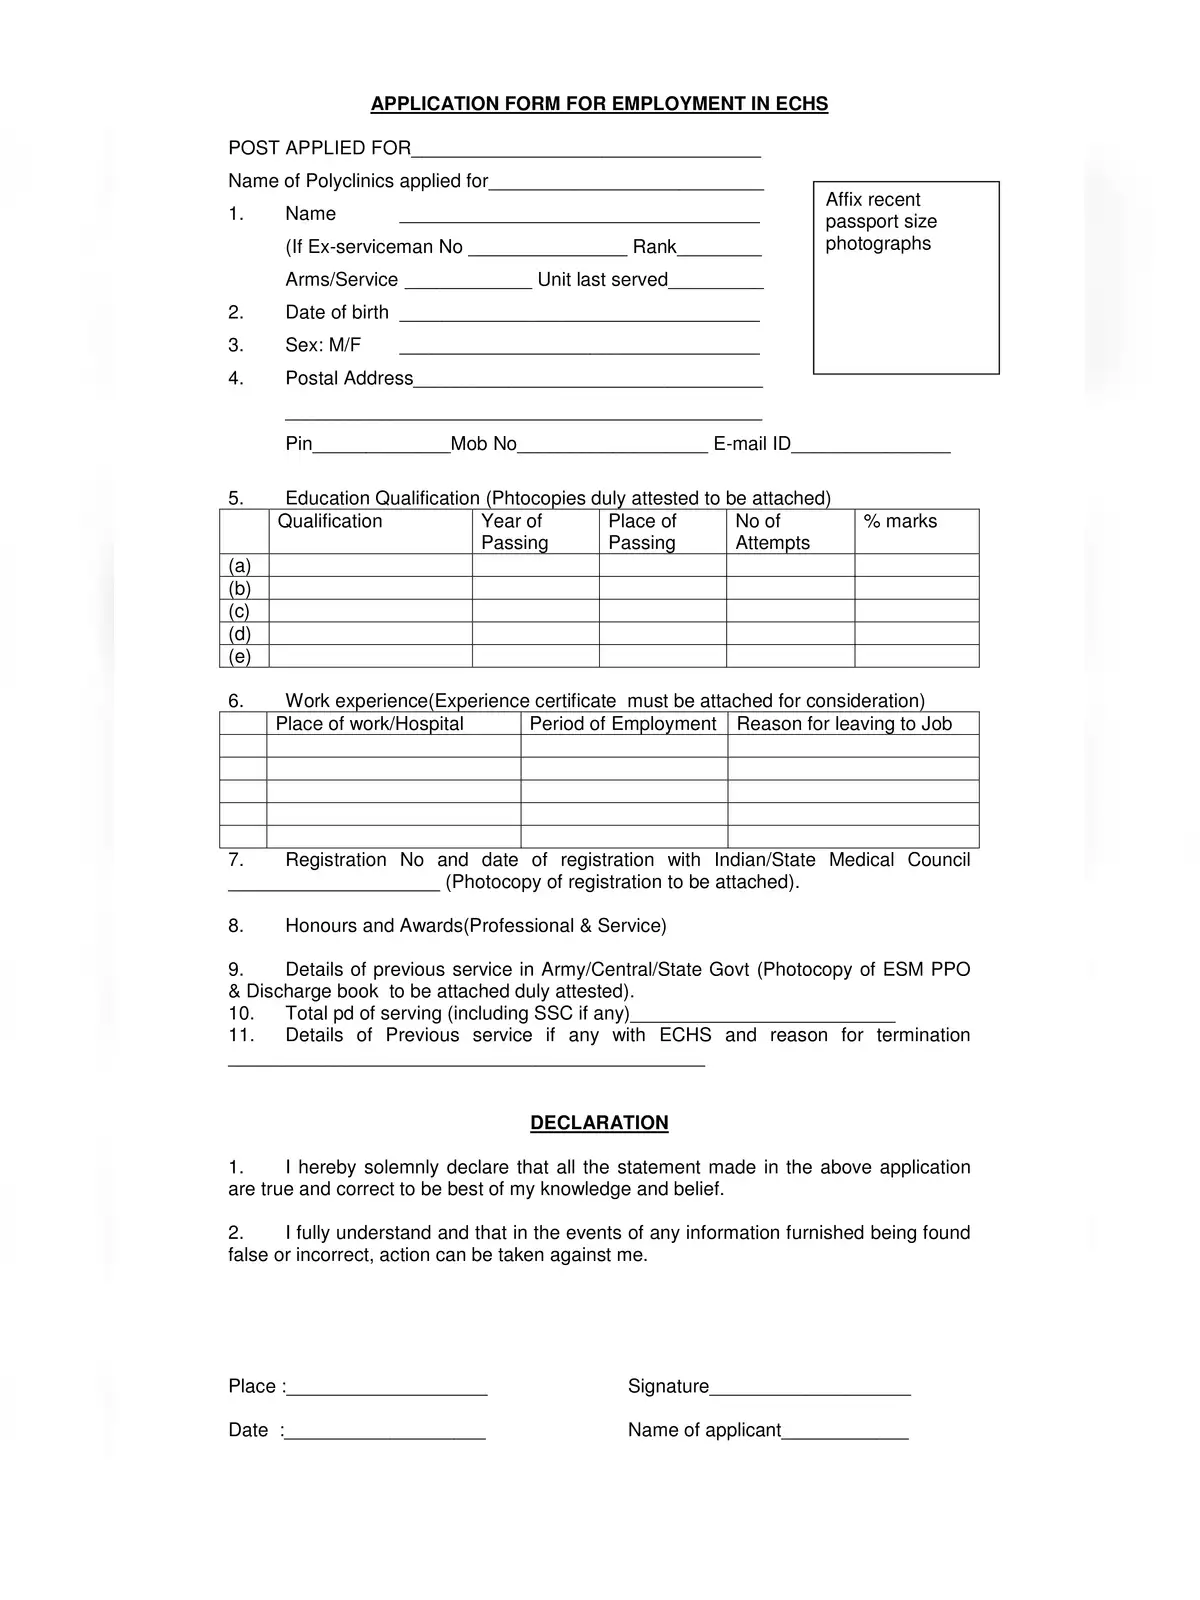 ECHS Employment Application Form